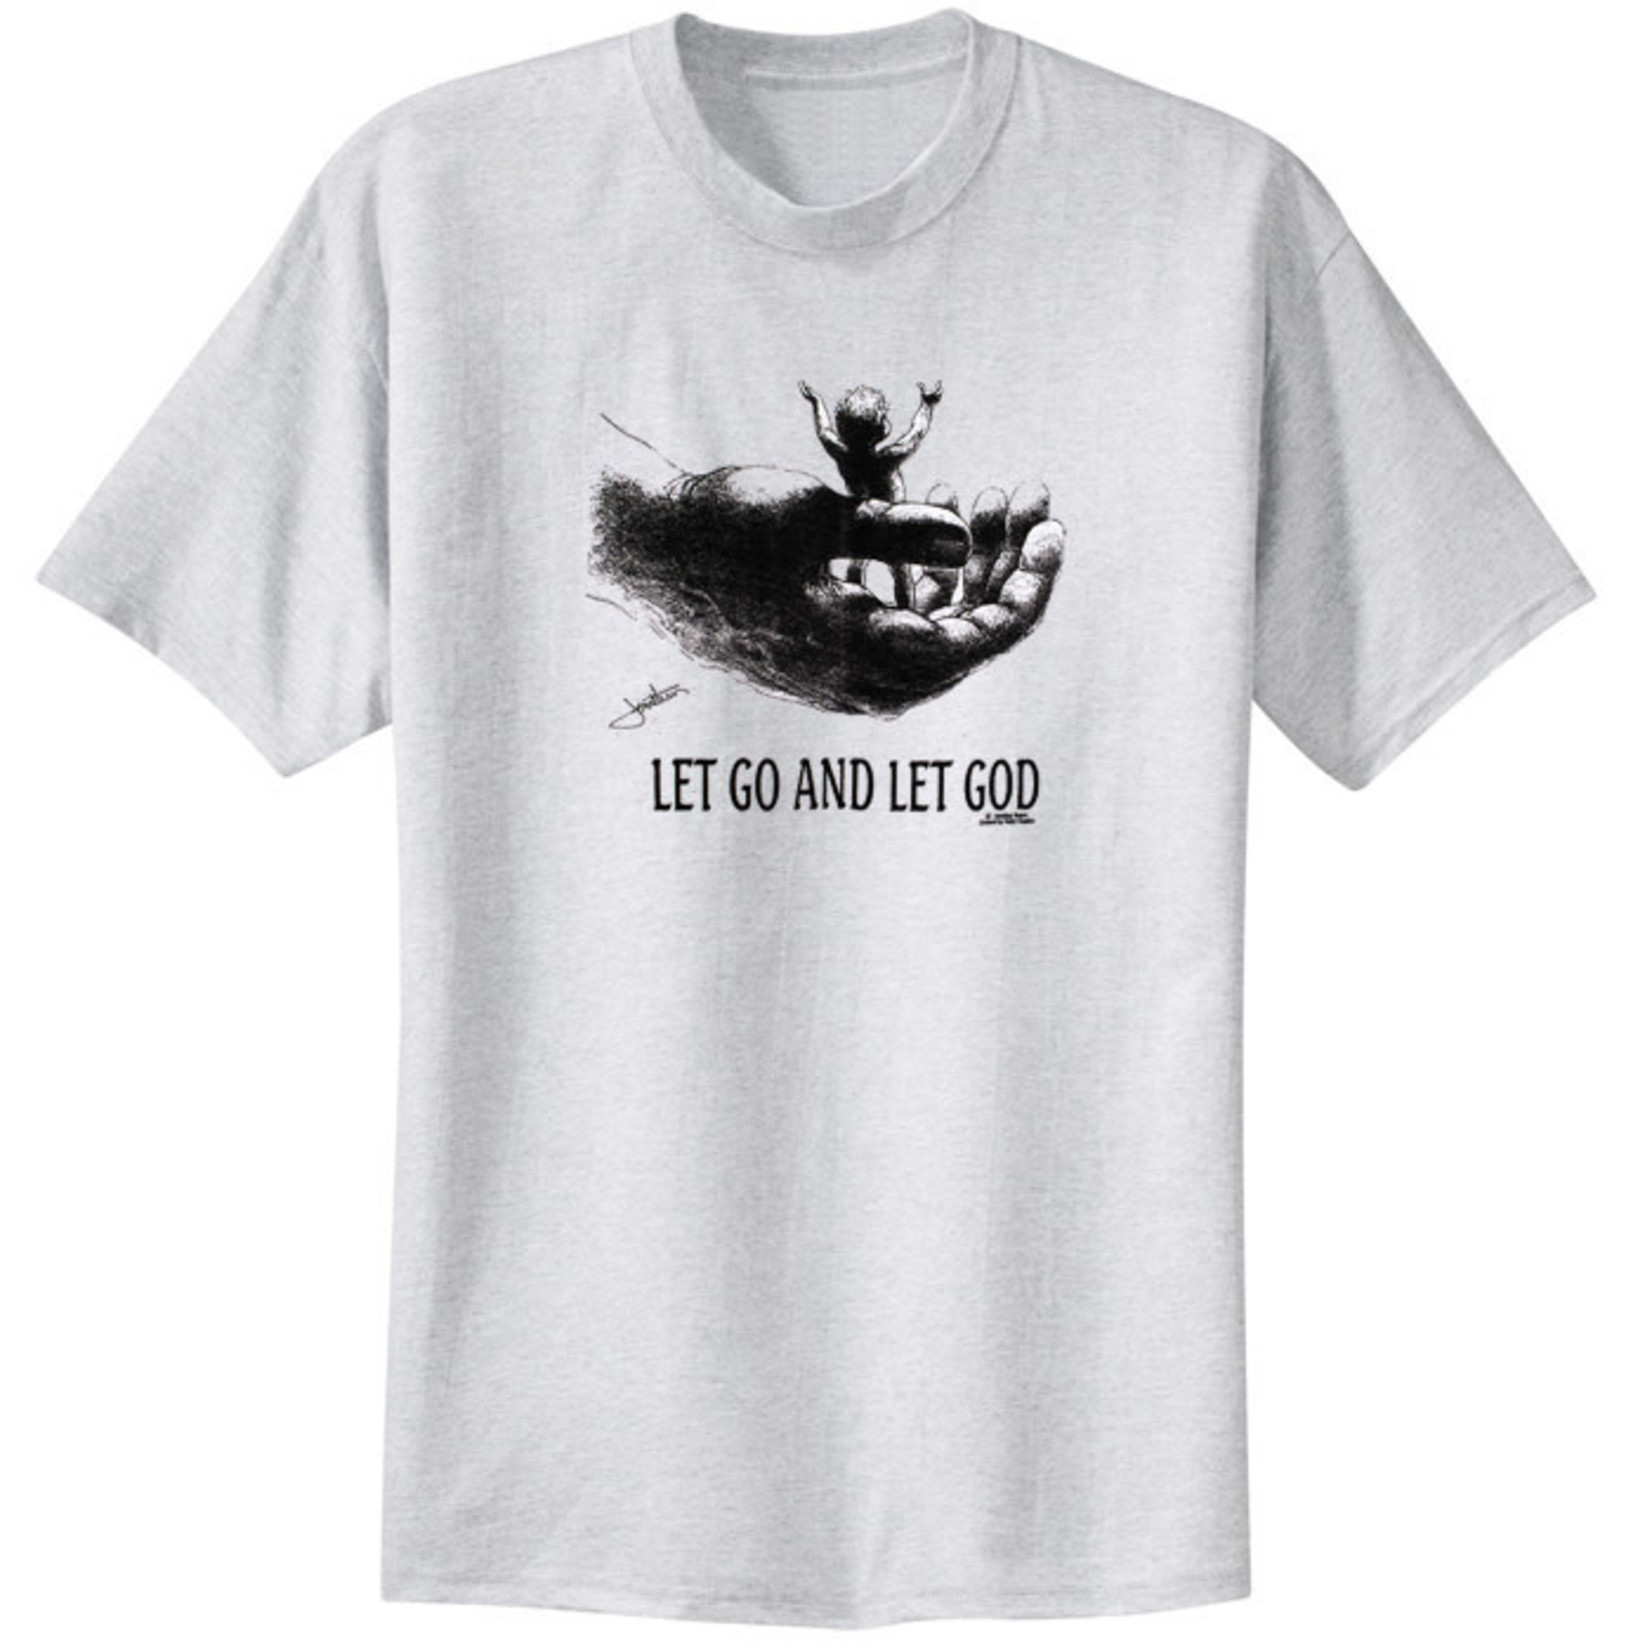 Shirts (Let Go And Let God)